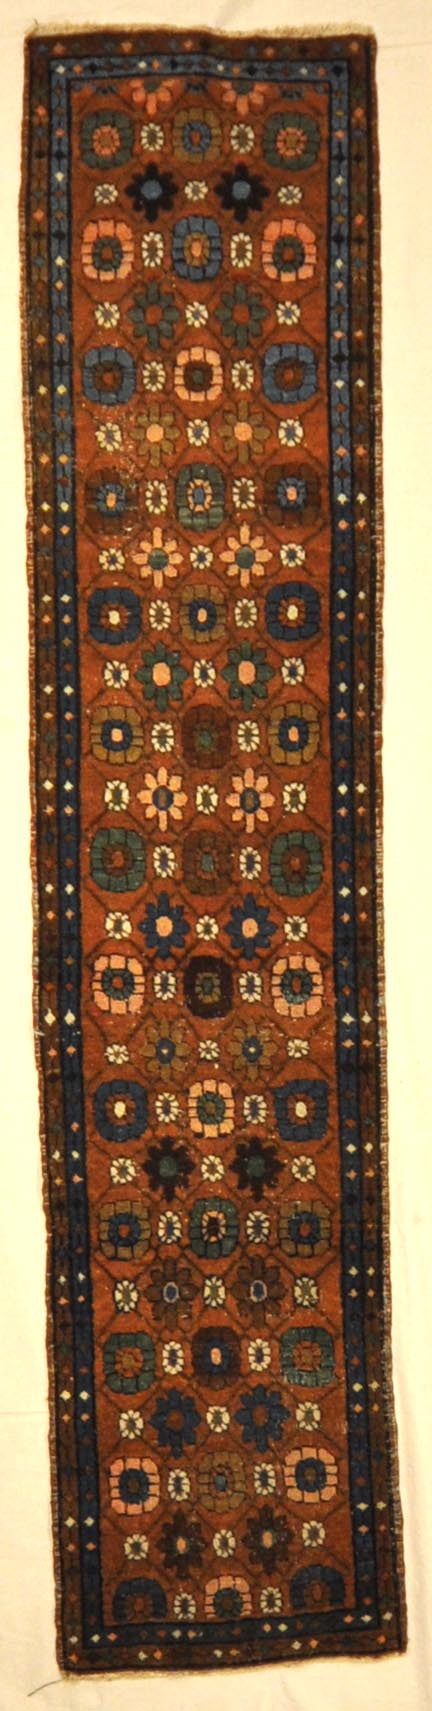 Antique Bakhshayesh Runner rug | Rugs and More | Santa Barbara Design Center 44249